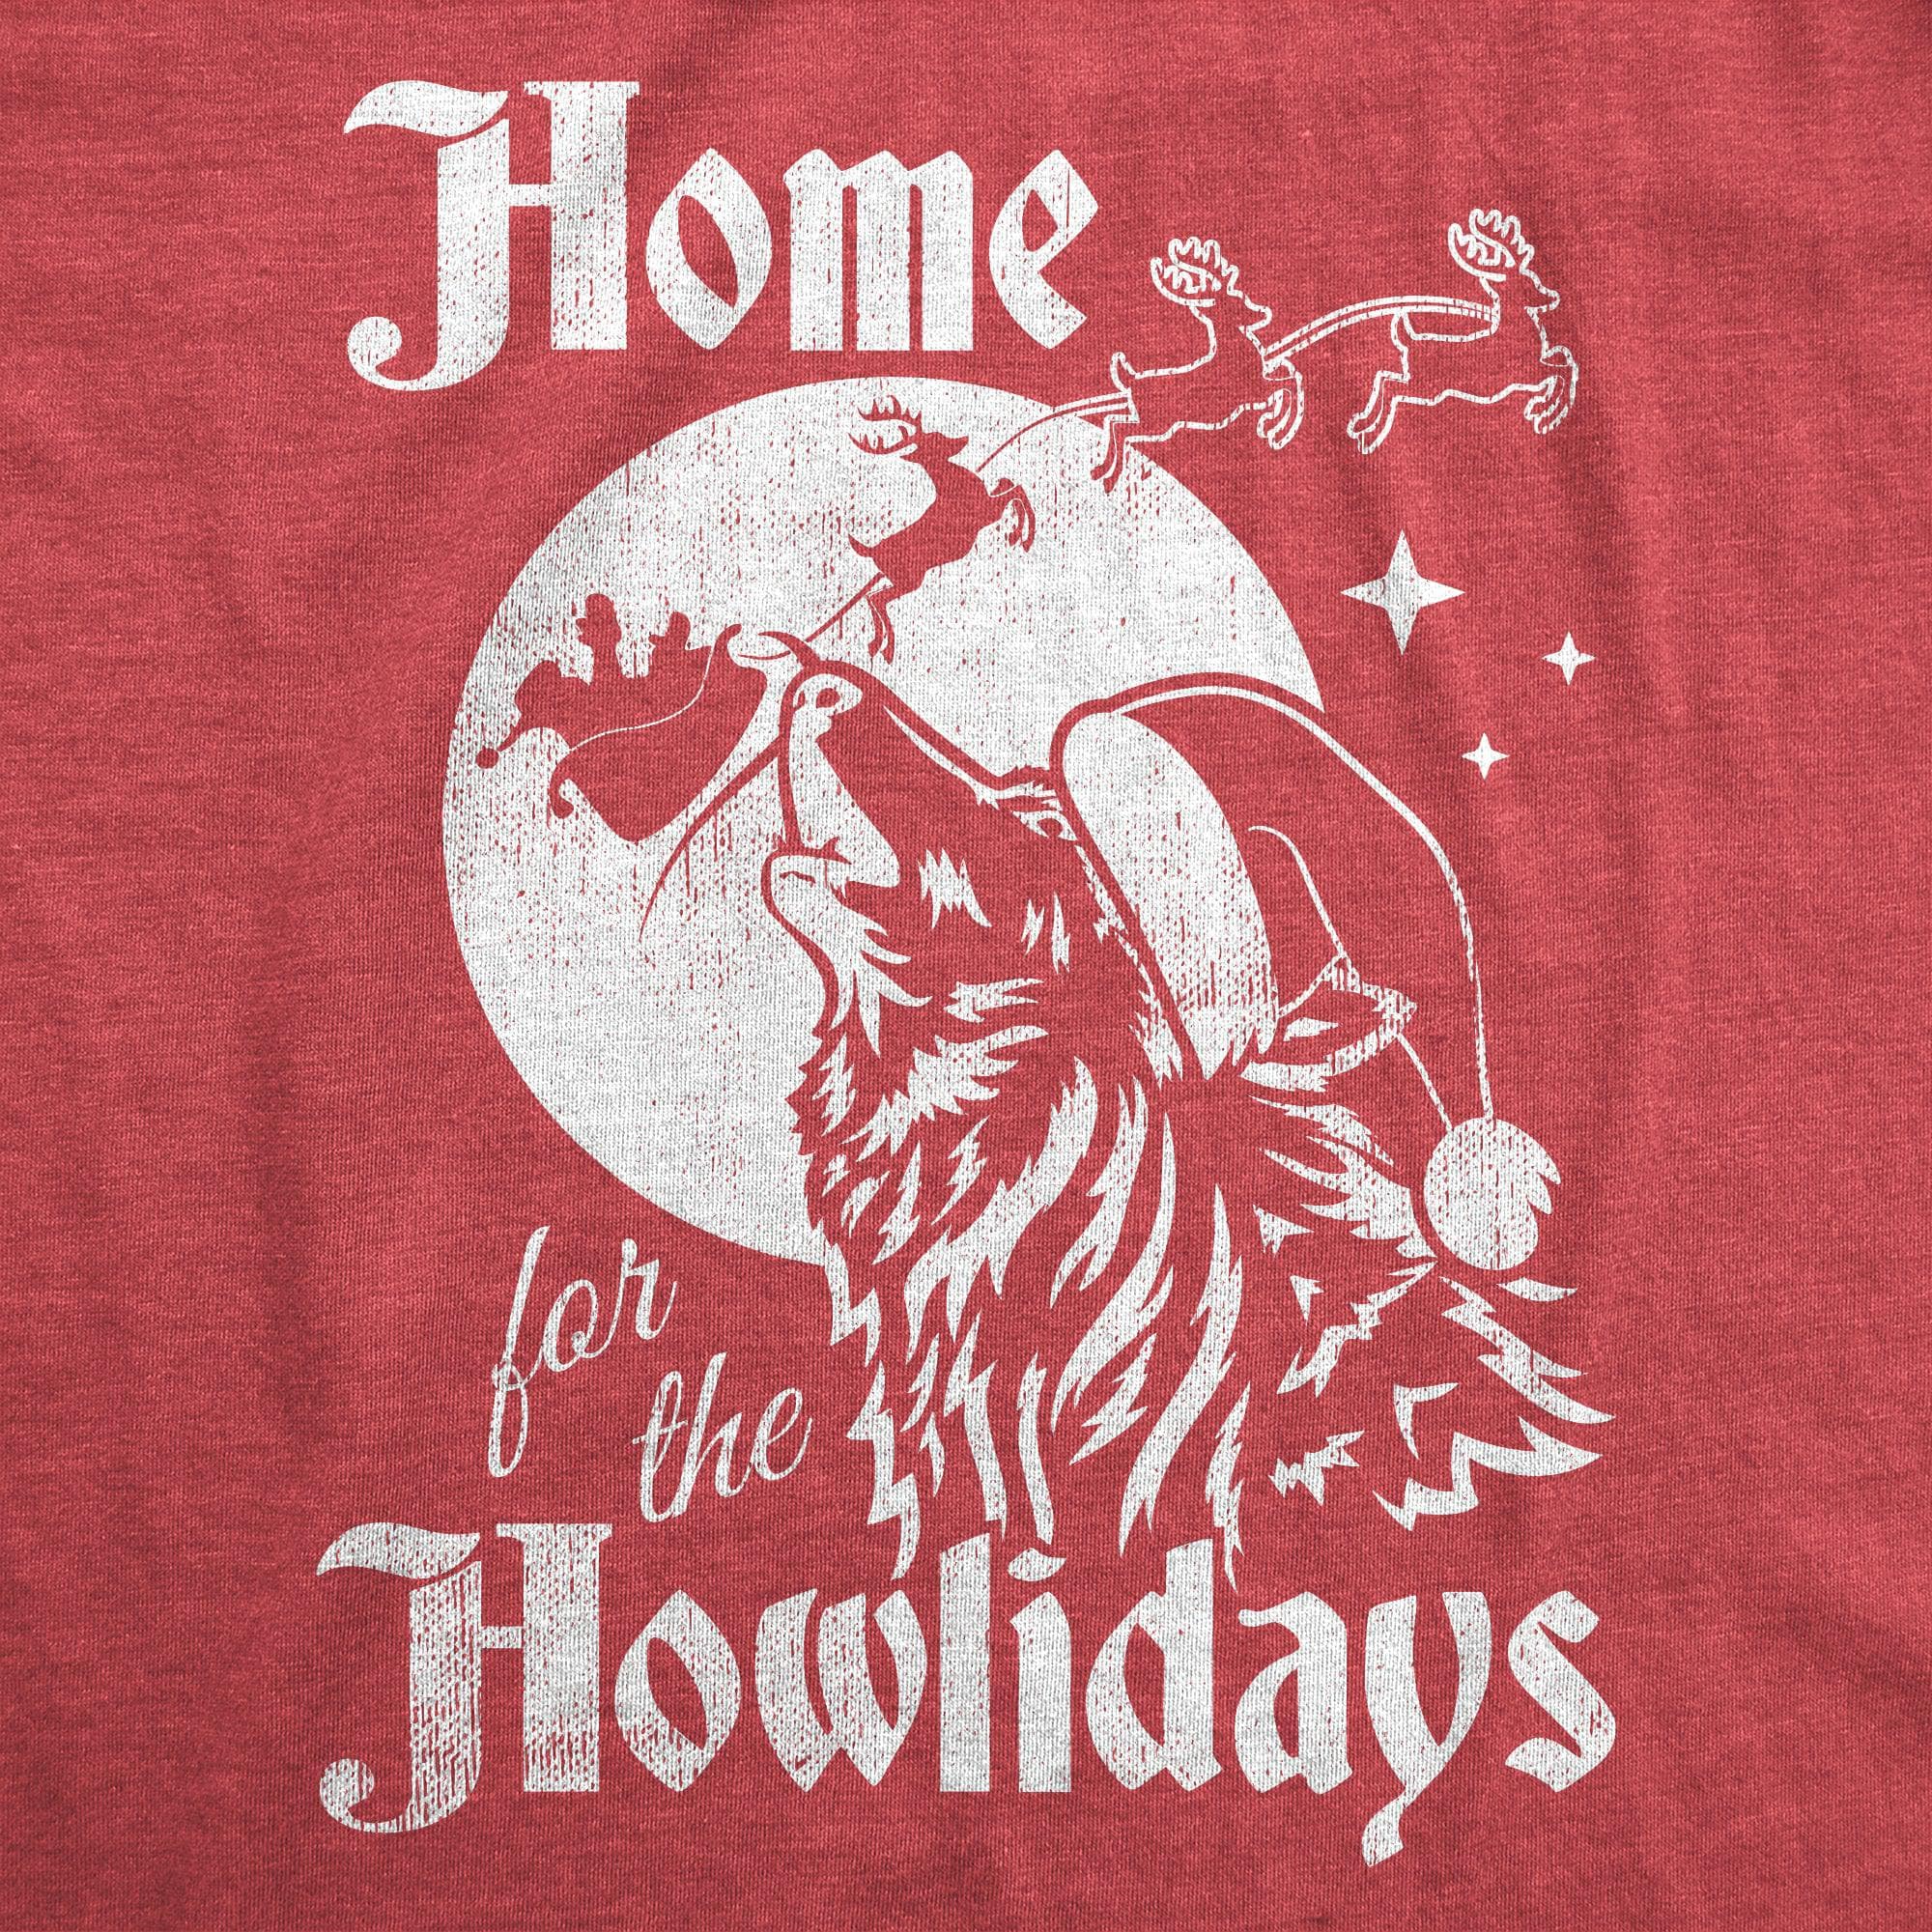 Home For The Howlidays Men's Tshirt  -  Crazy Dog T-Shirts